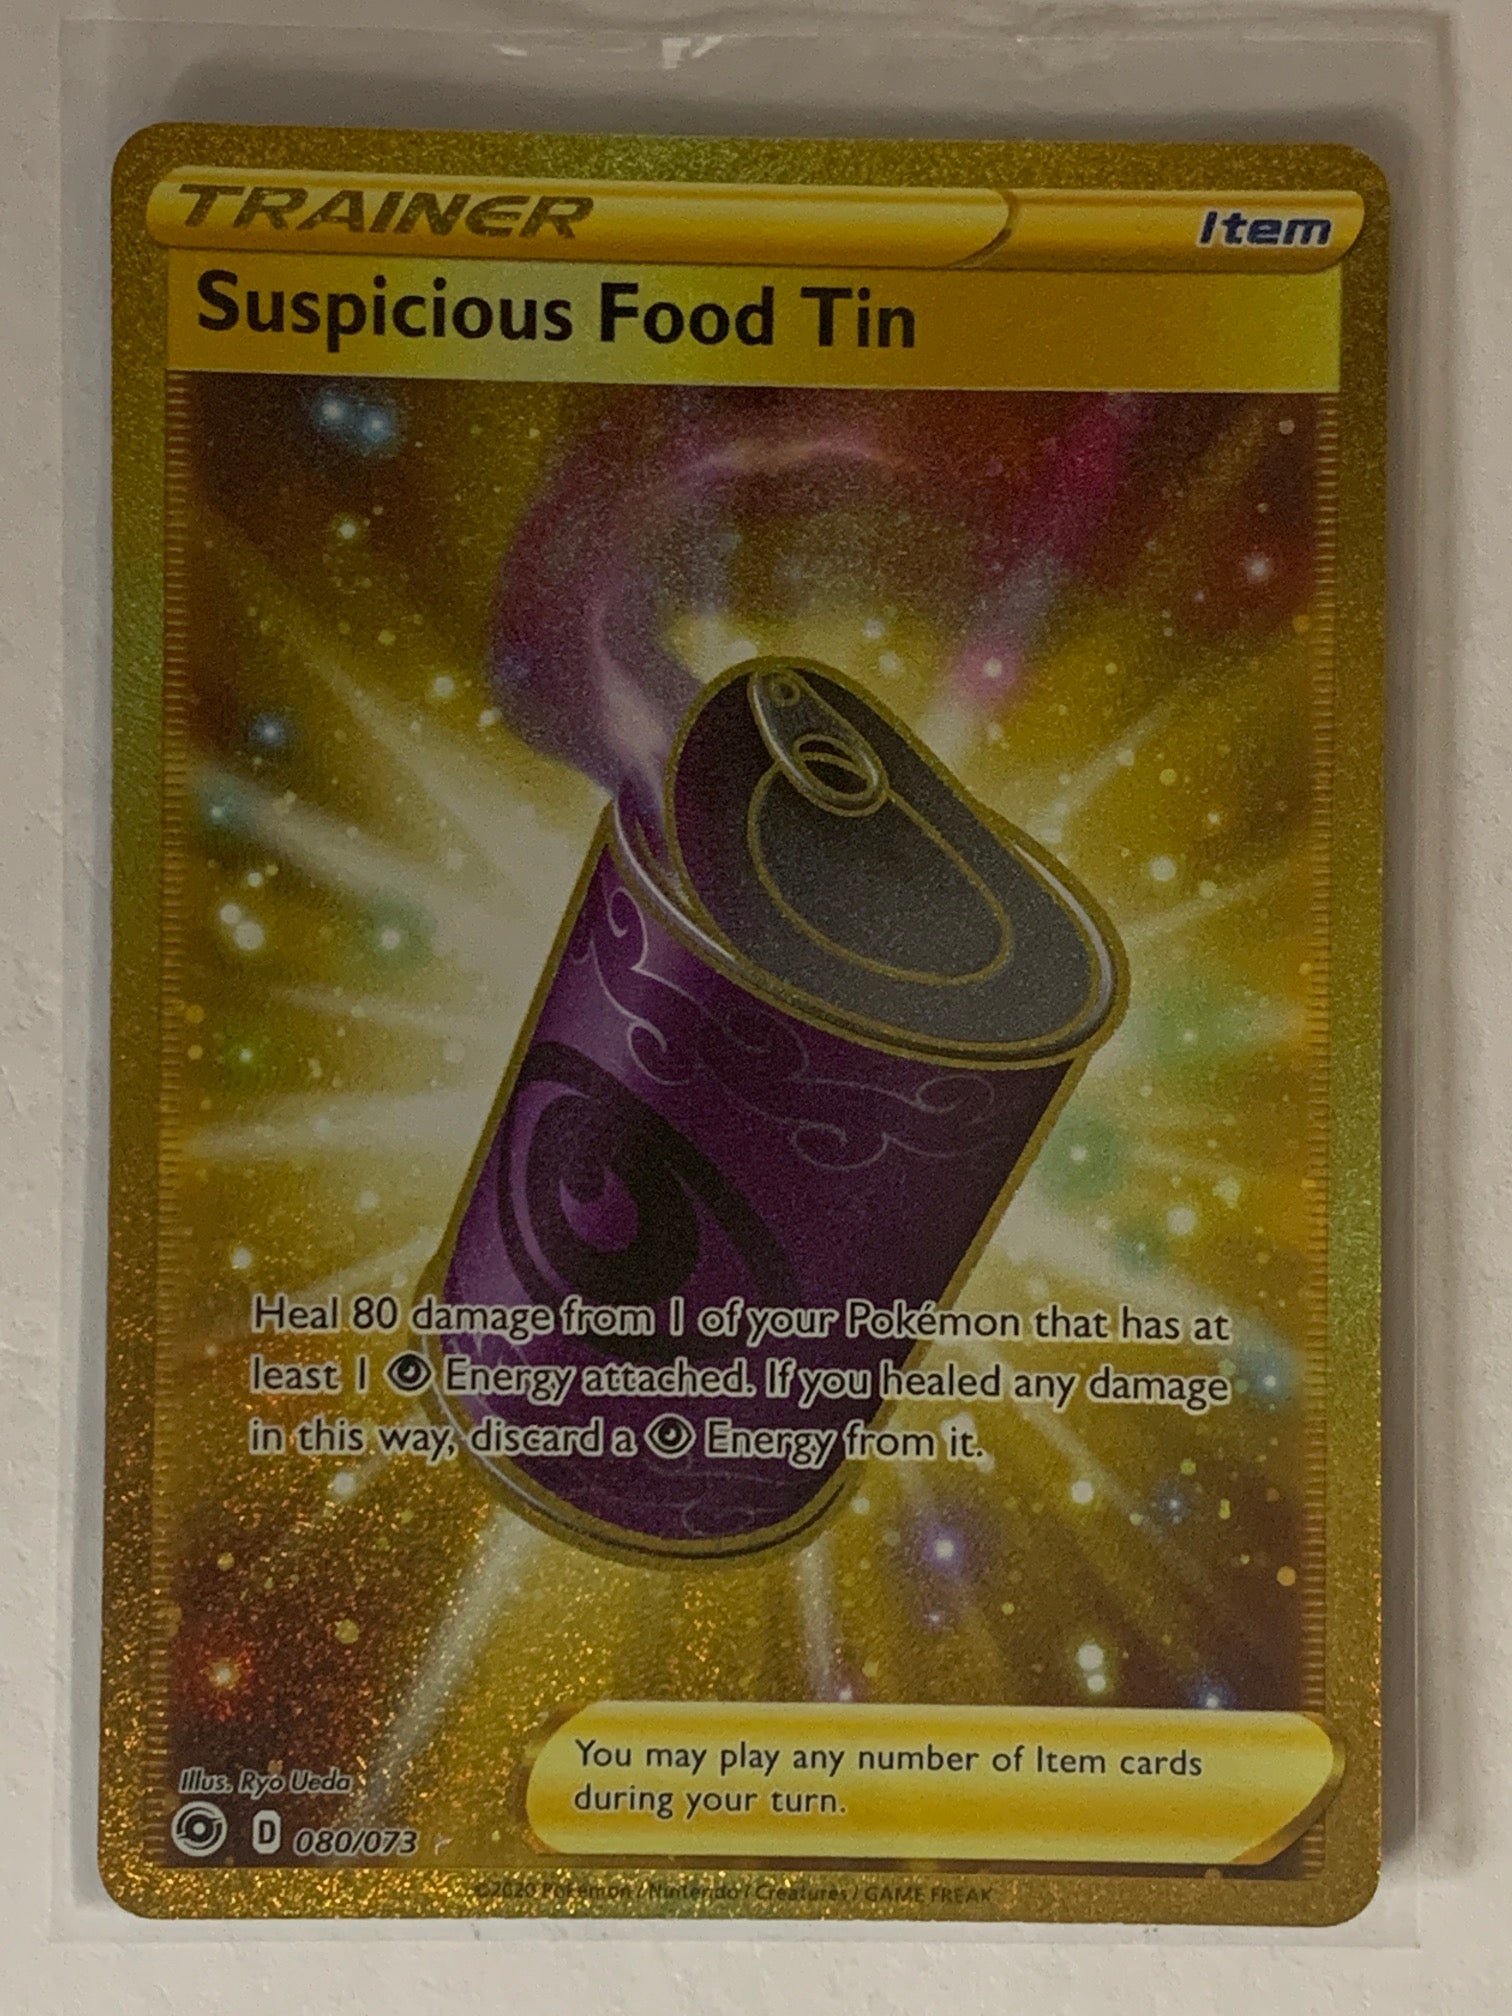 Suspicious Food Tin (Secret) - 080/073 - Pokemon Champion's Path (M/NM)